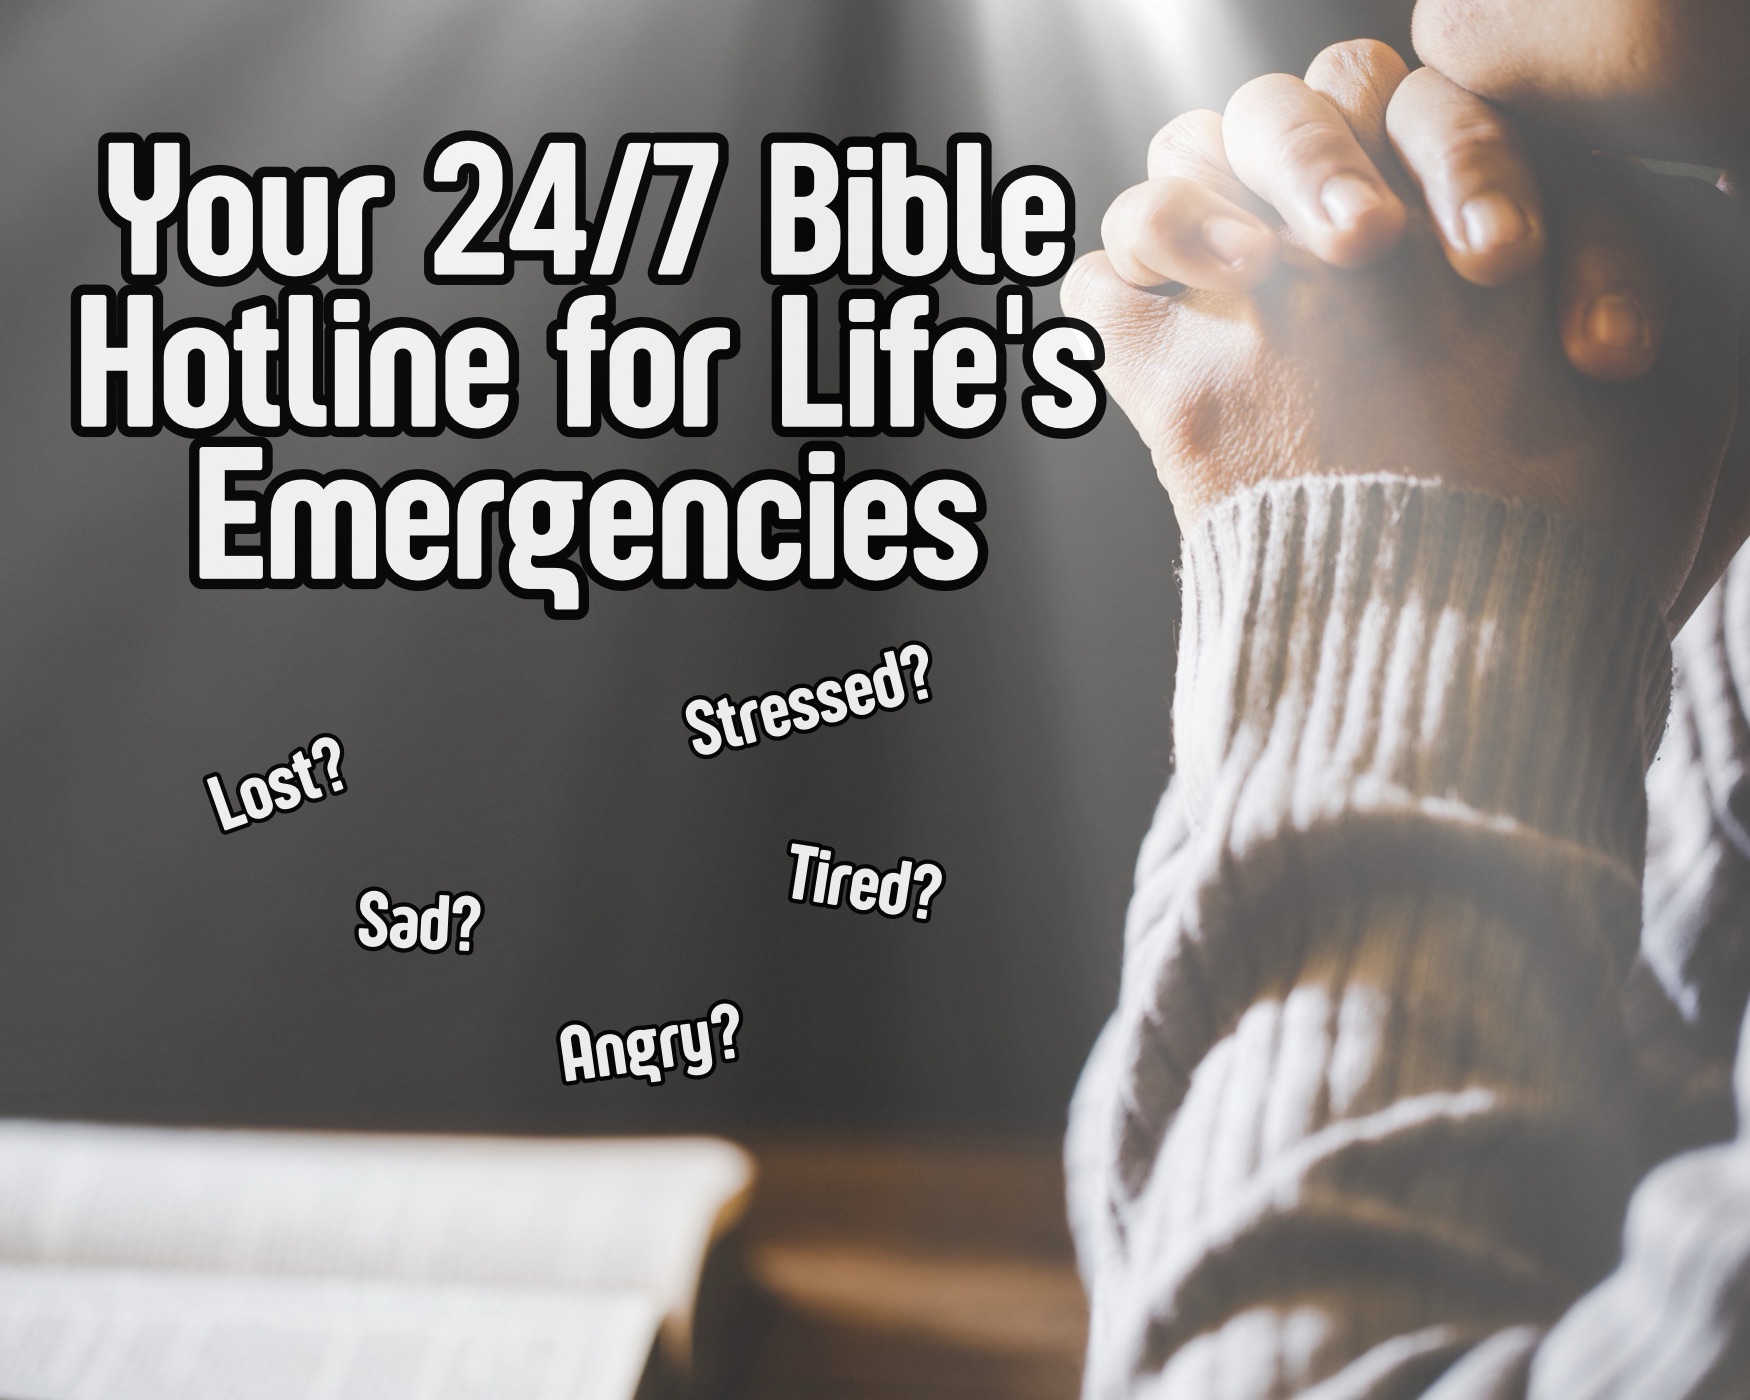 Healing After Heartbreak: Trusting God&#8217;s Plan Through Psalm 37